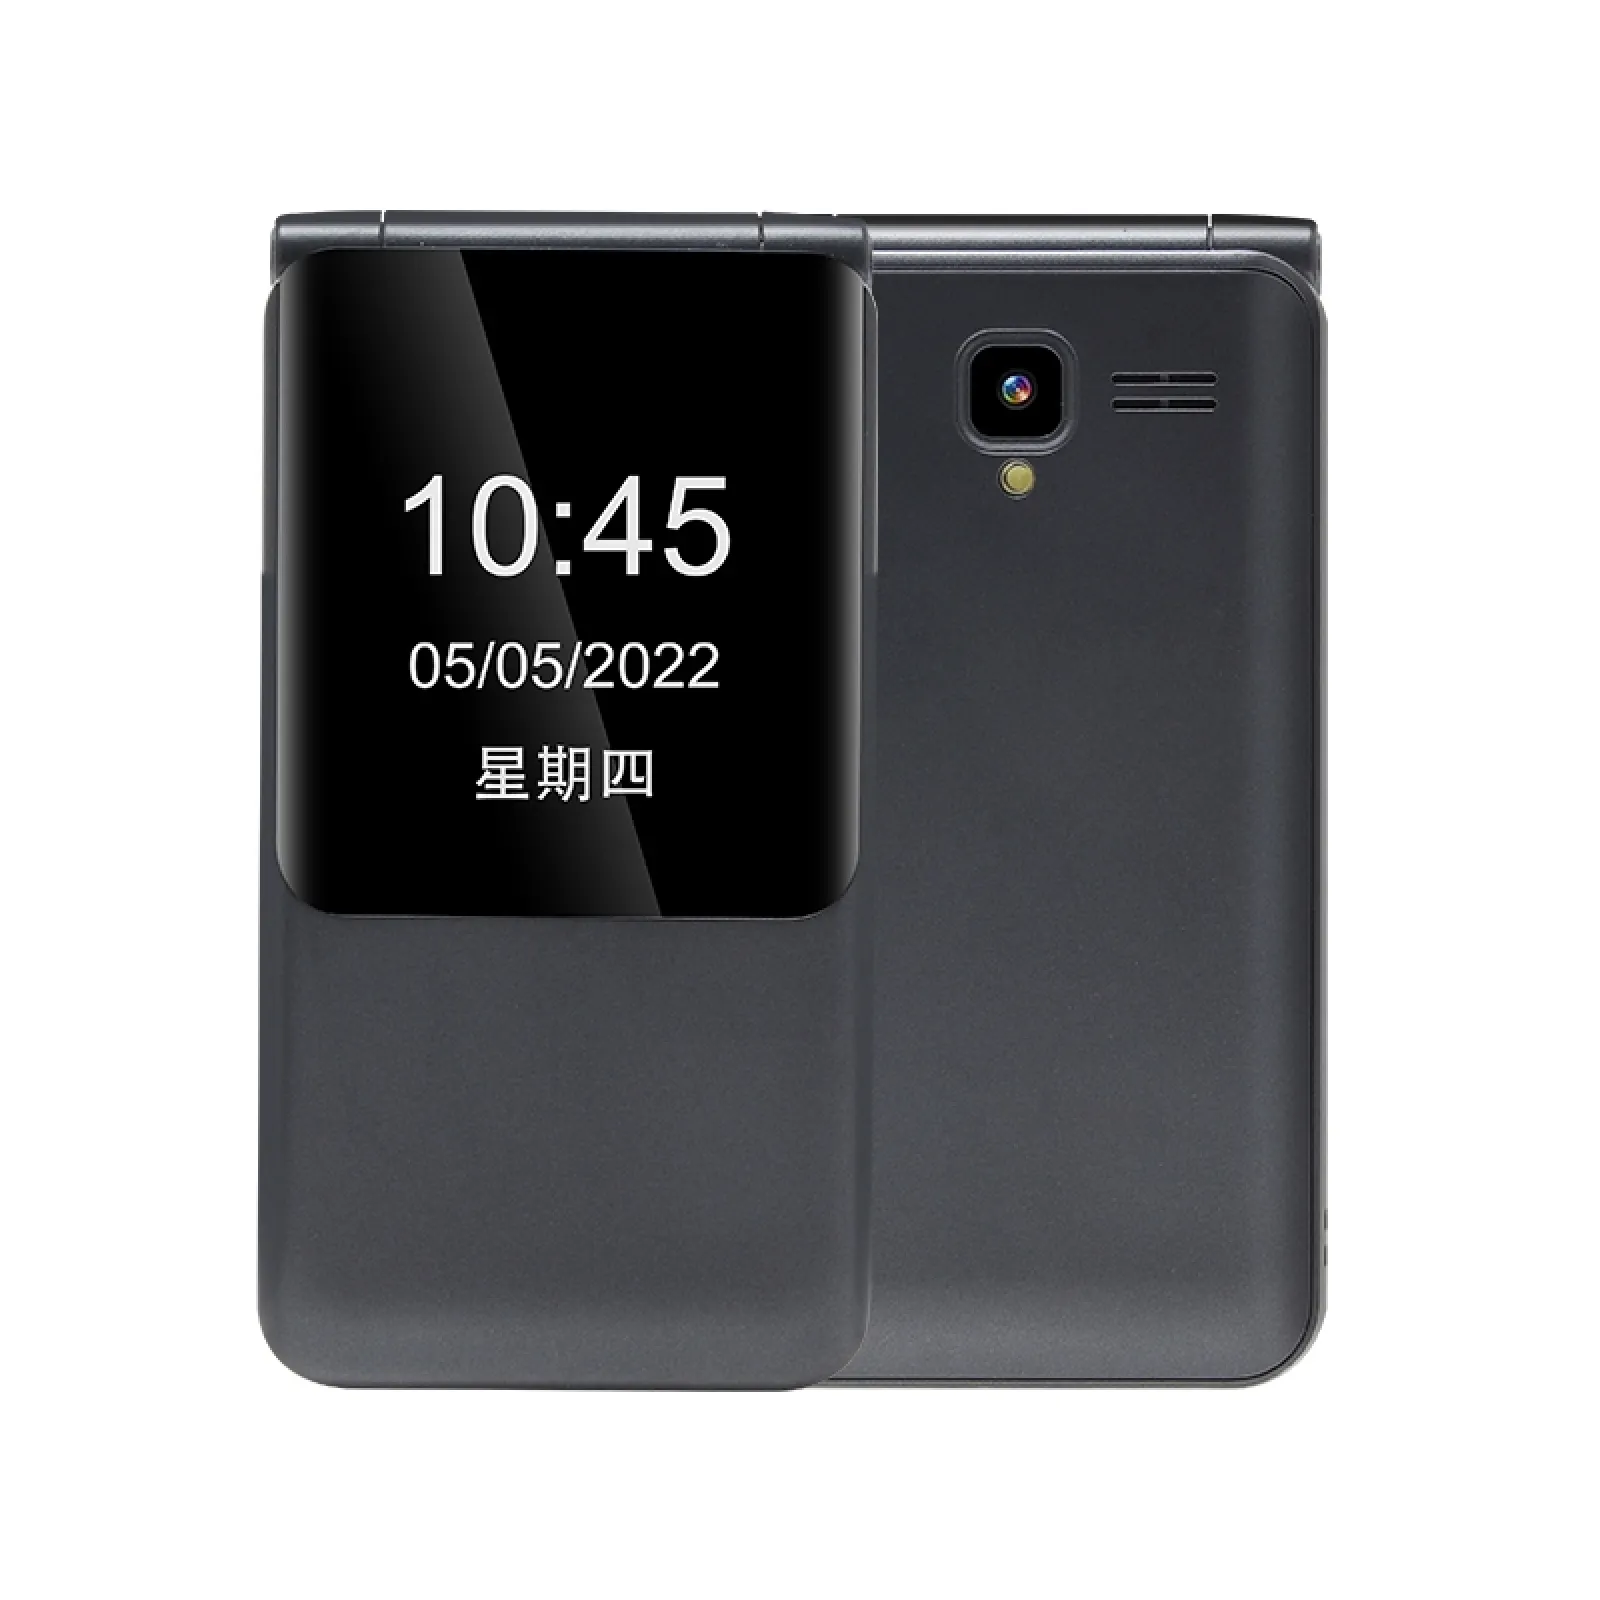 4G Dual Screen Flip Smartphone 16GB Android GPS WiFi Große Anzahl Tasten SOS Dual SIM 4G altes Flip Phone